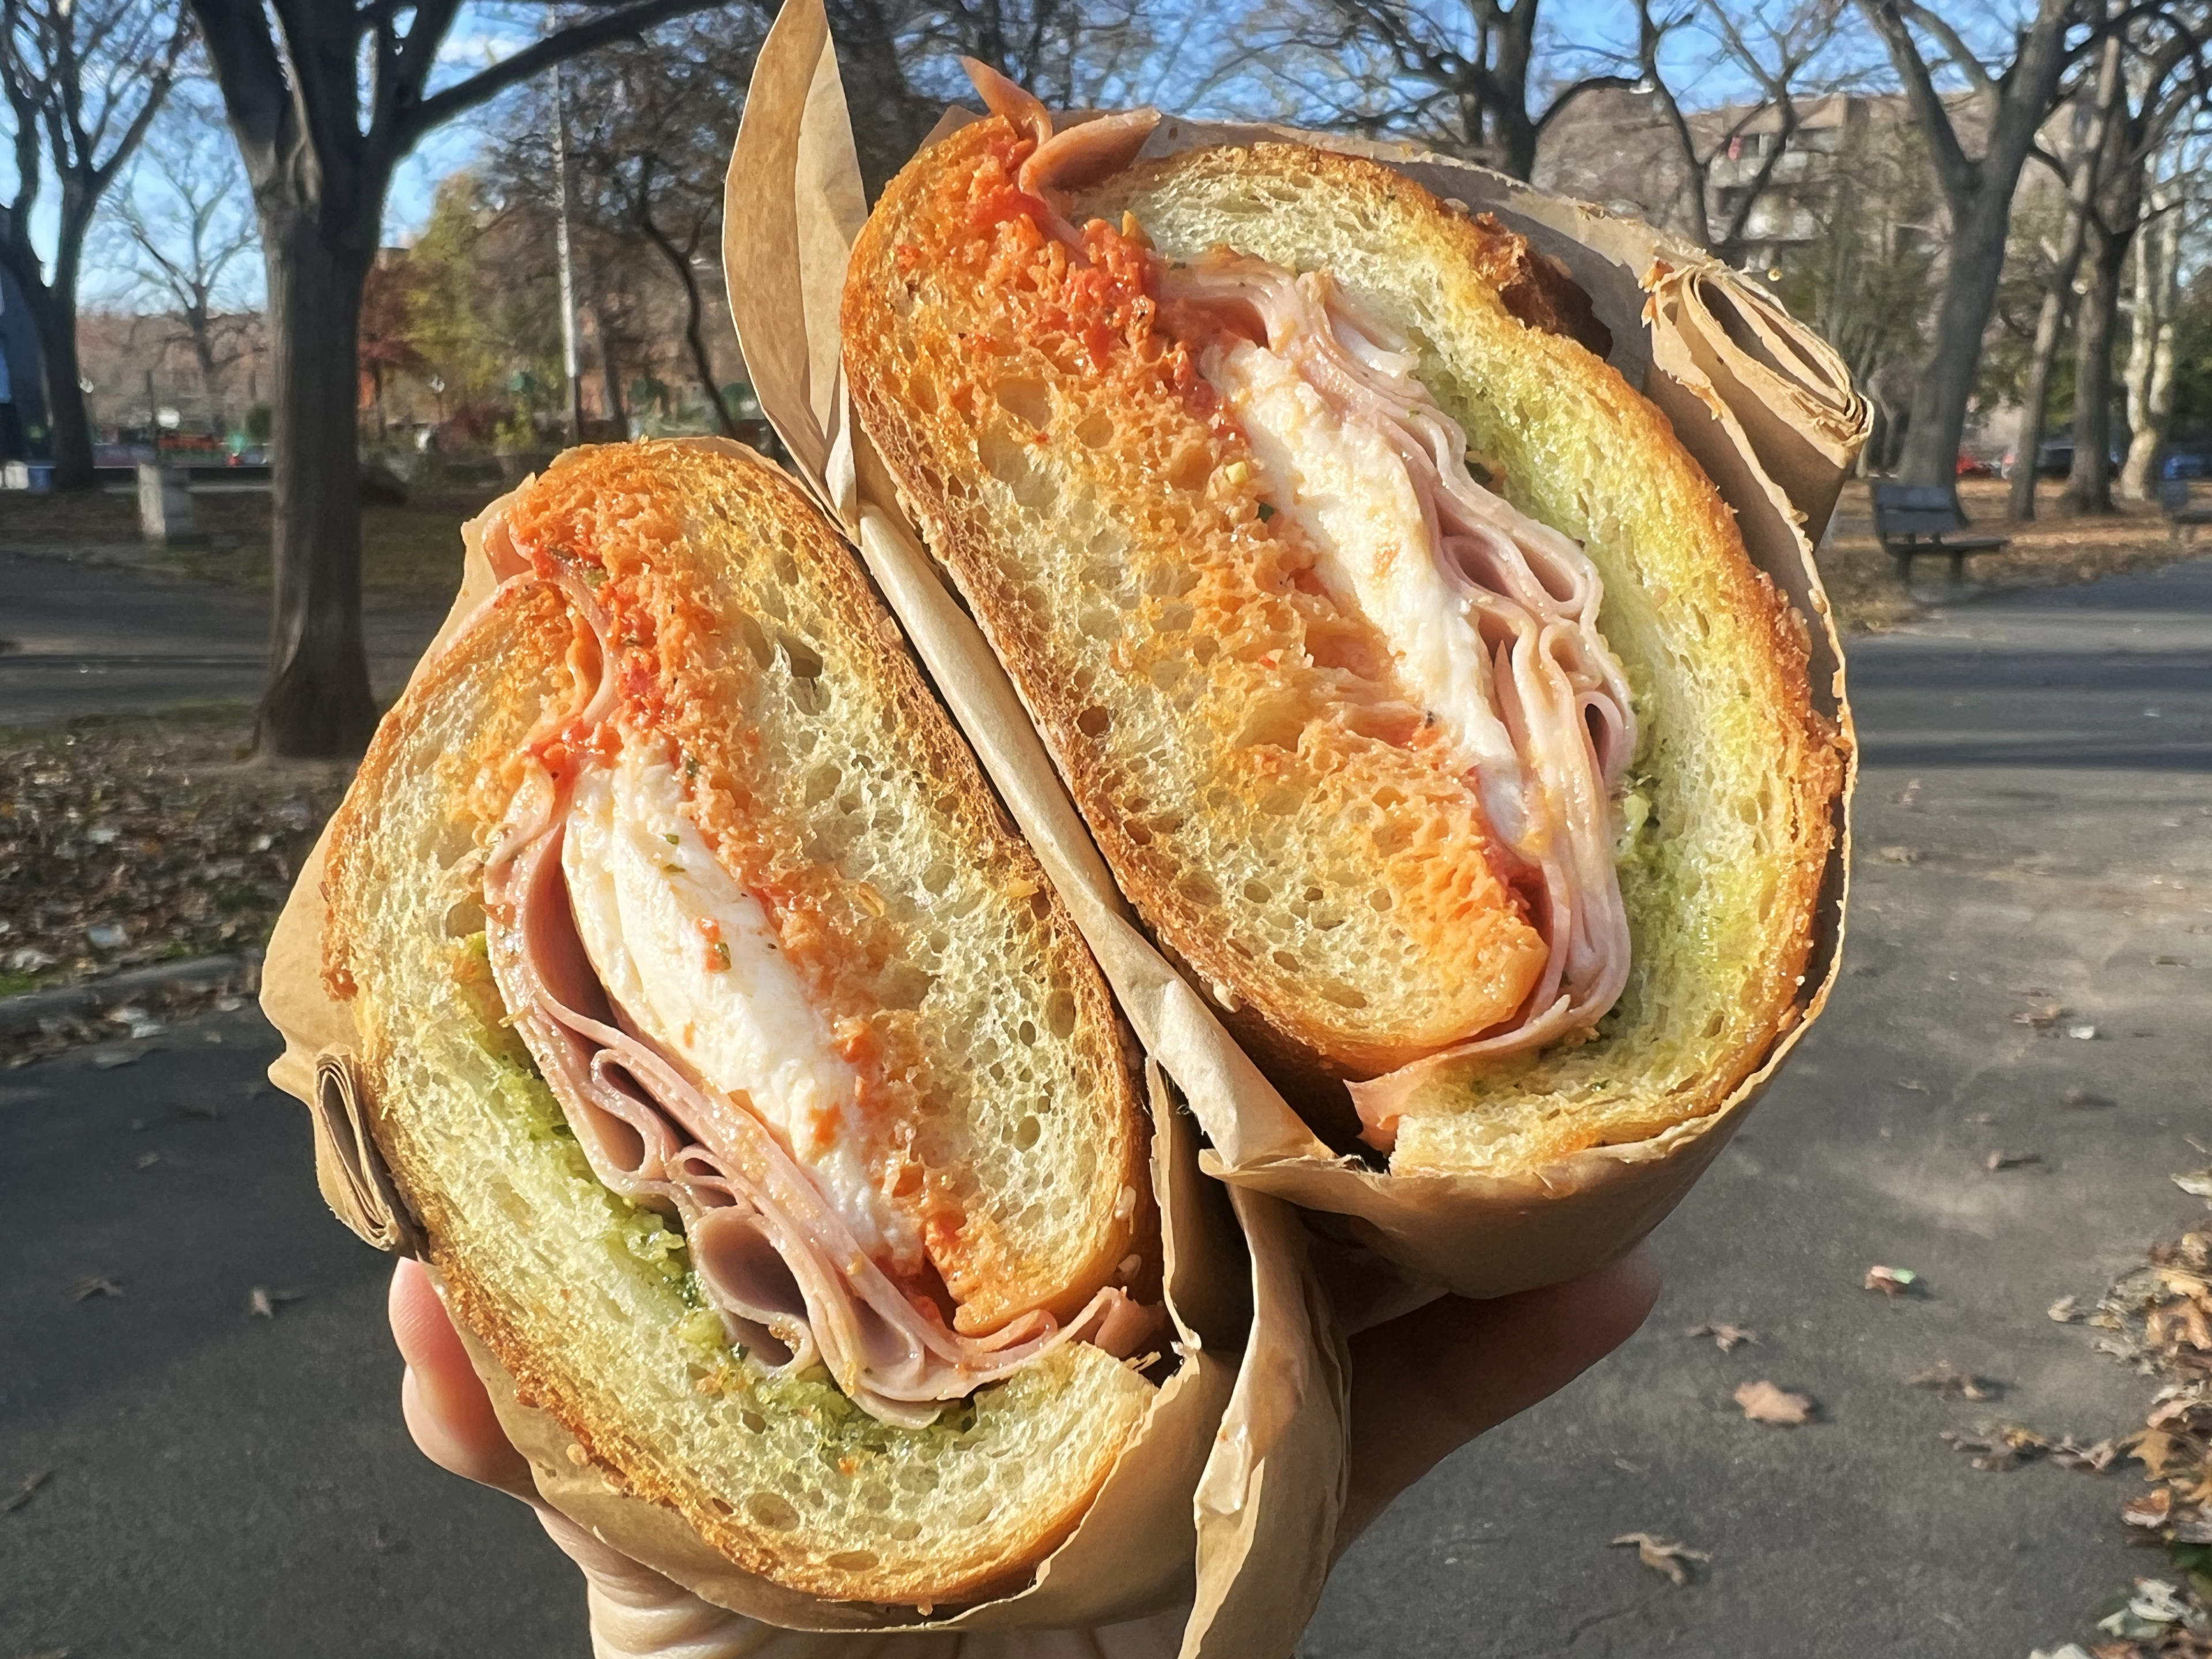 A mortadella sandwich from Salvo's in the park.